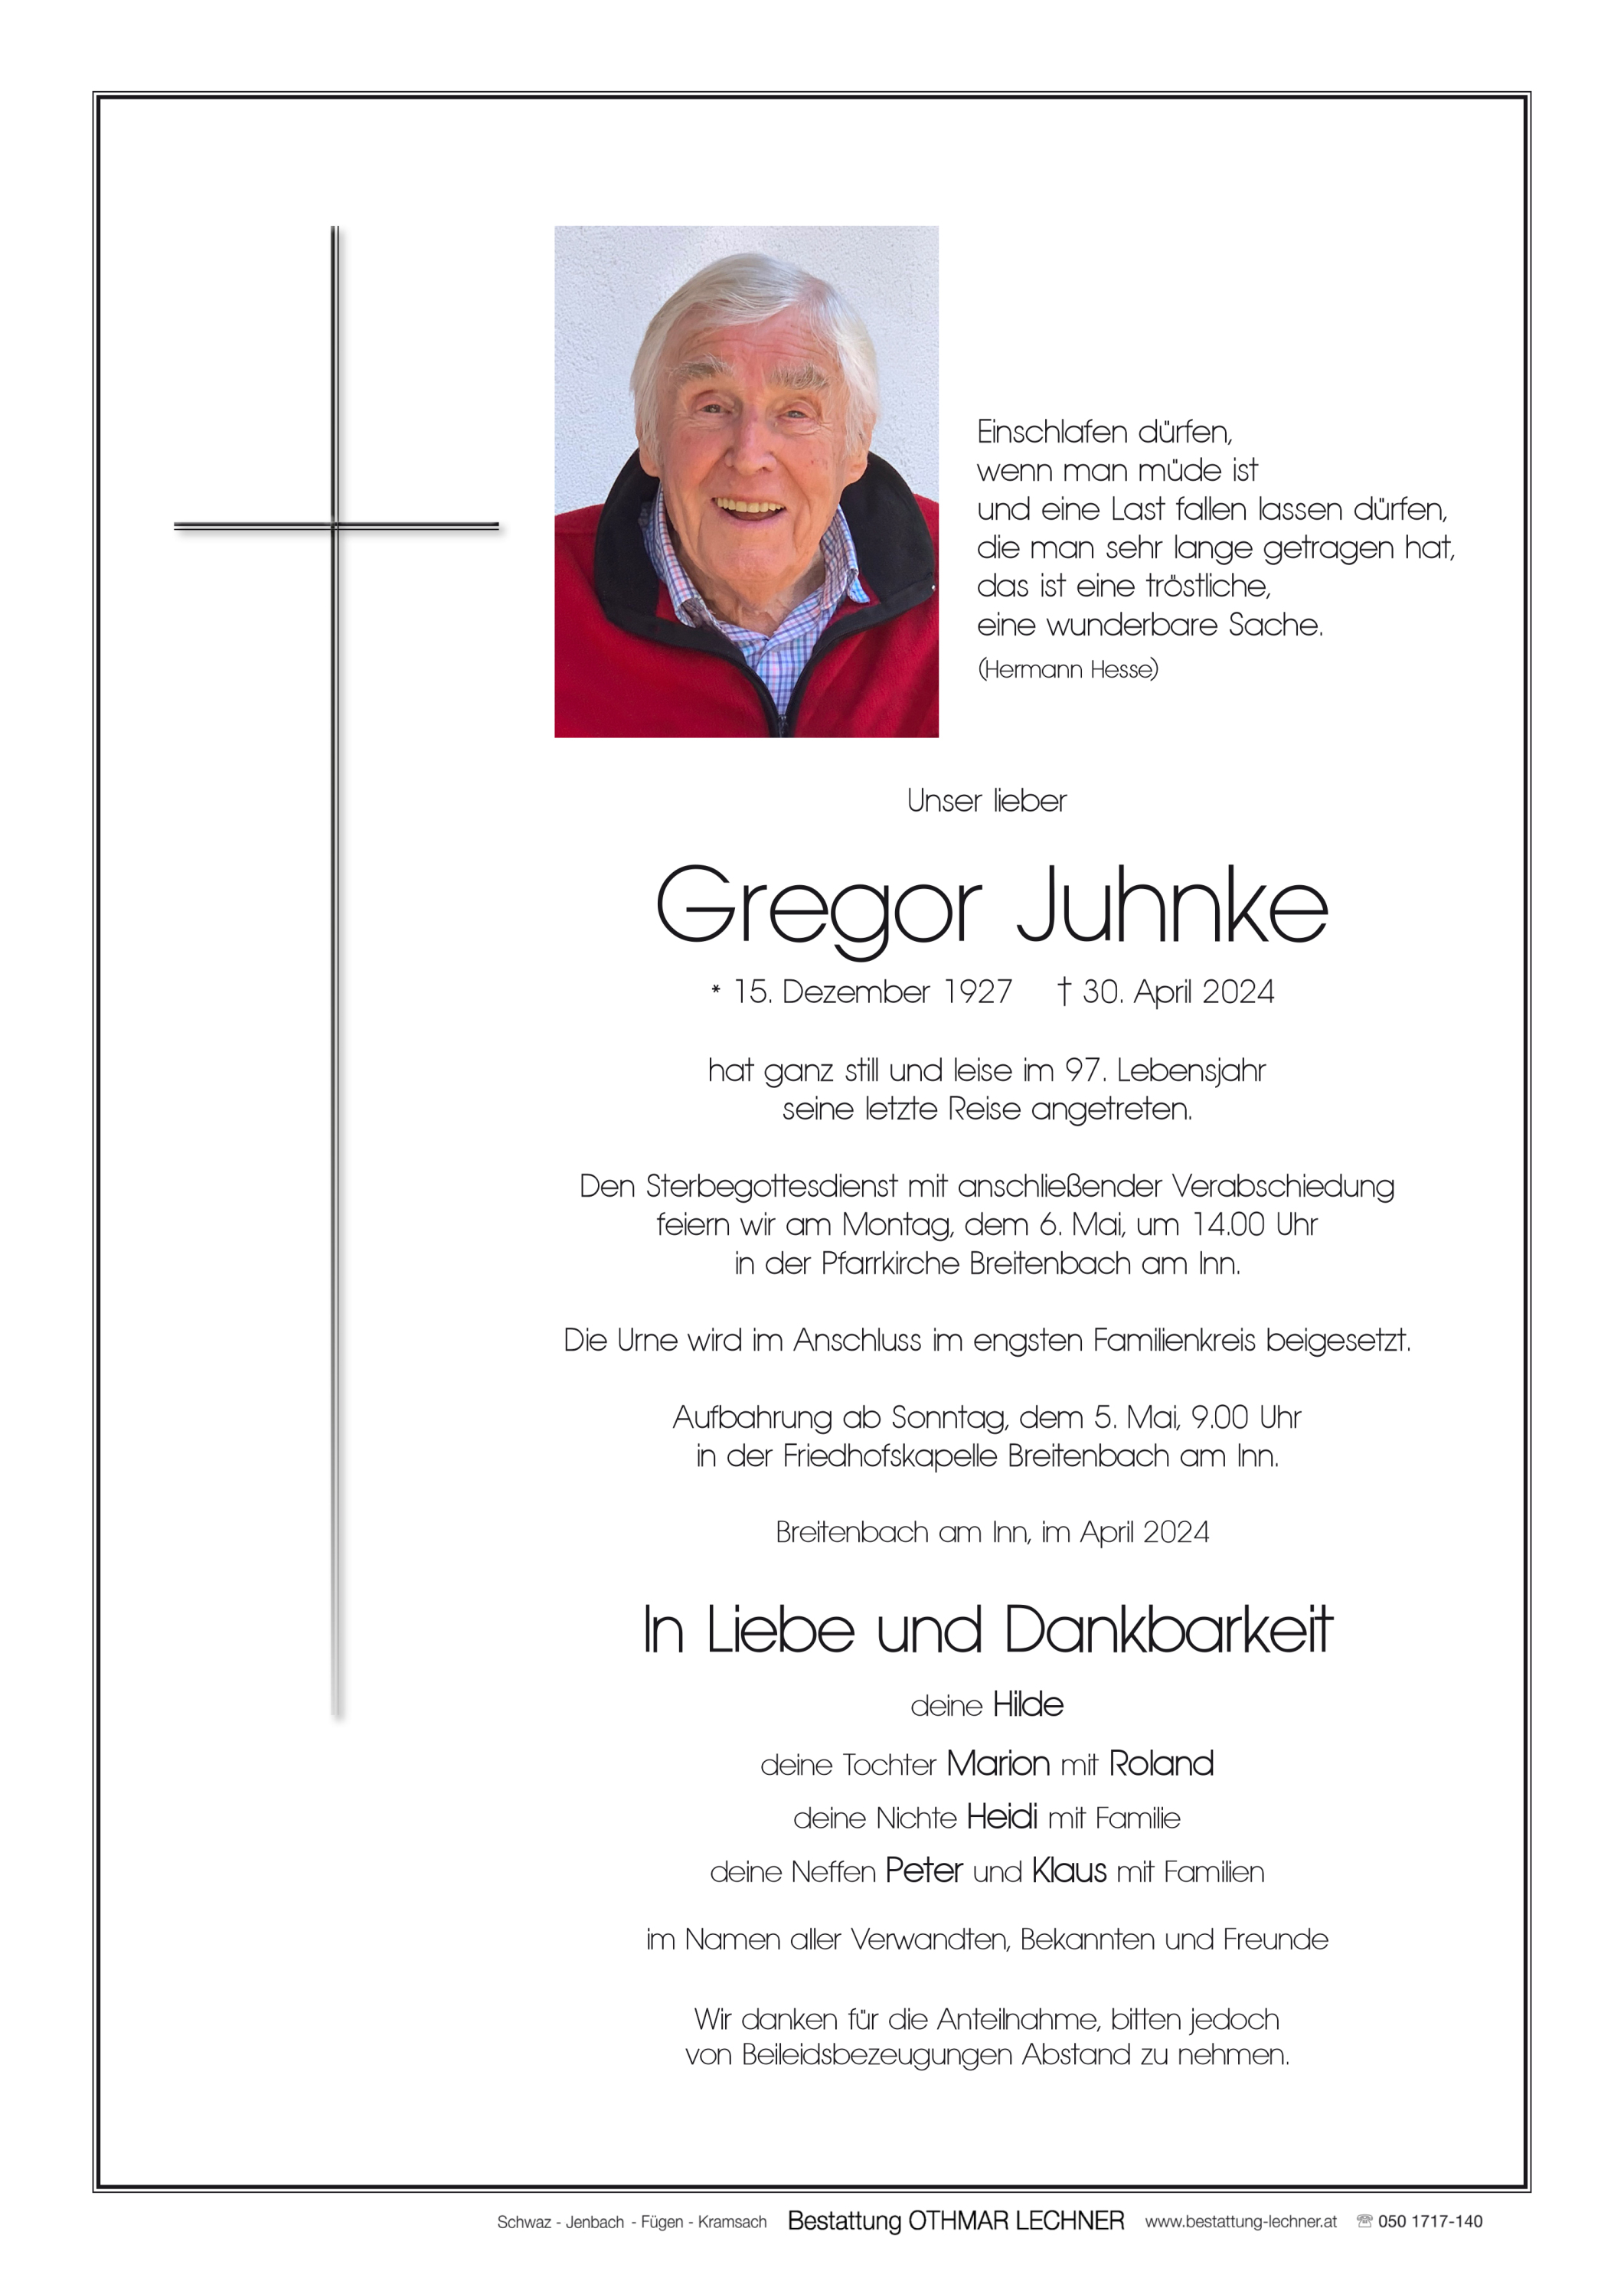 Gregor Juhnke